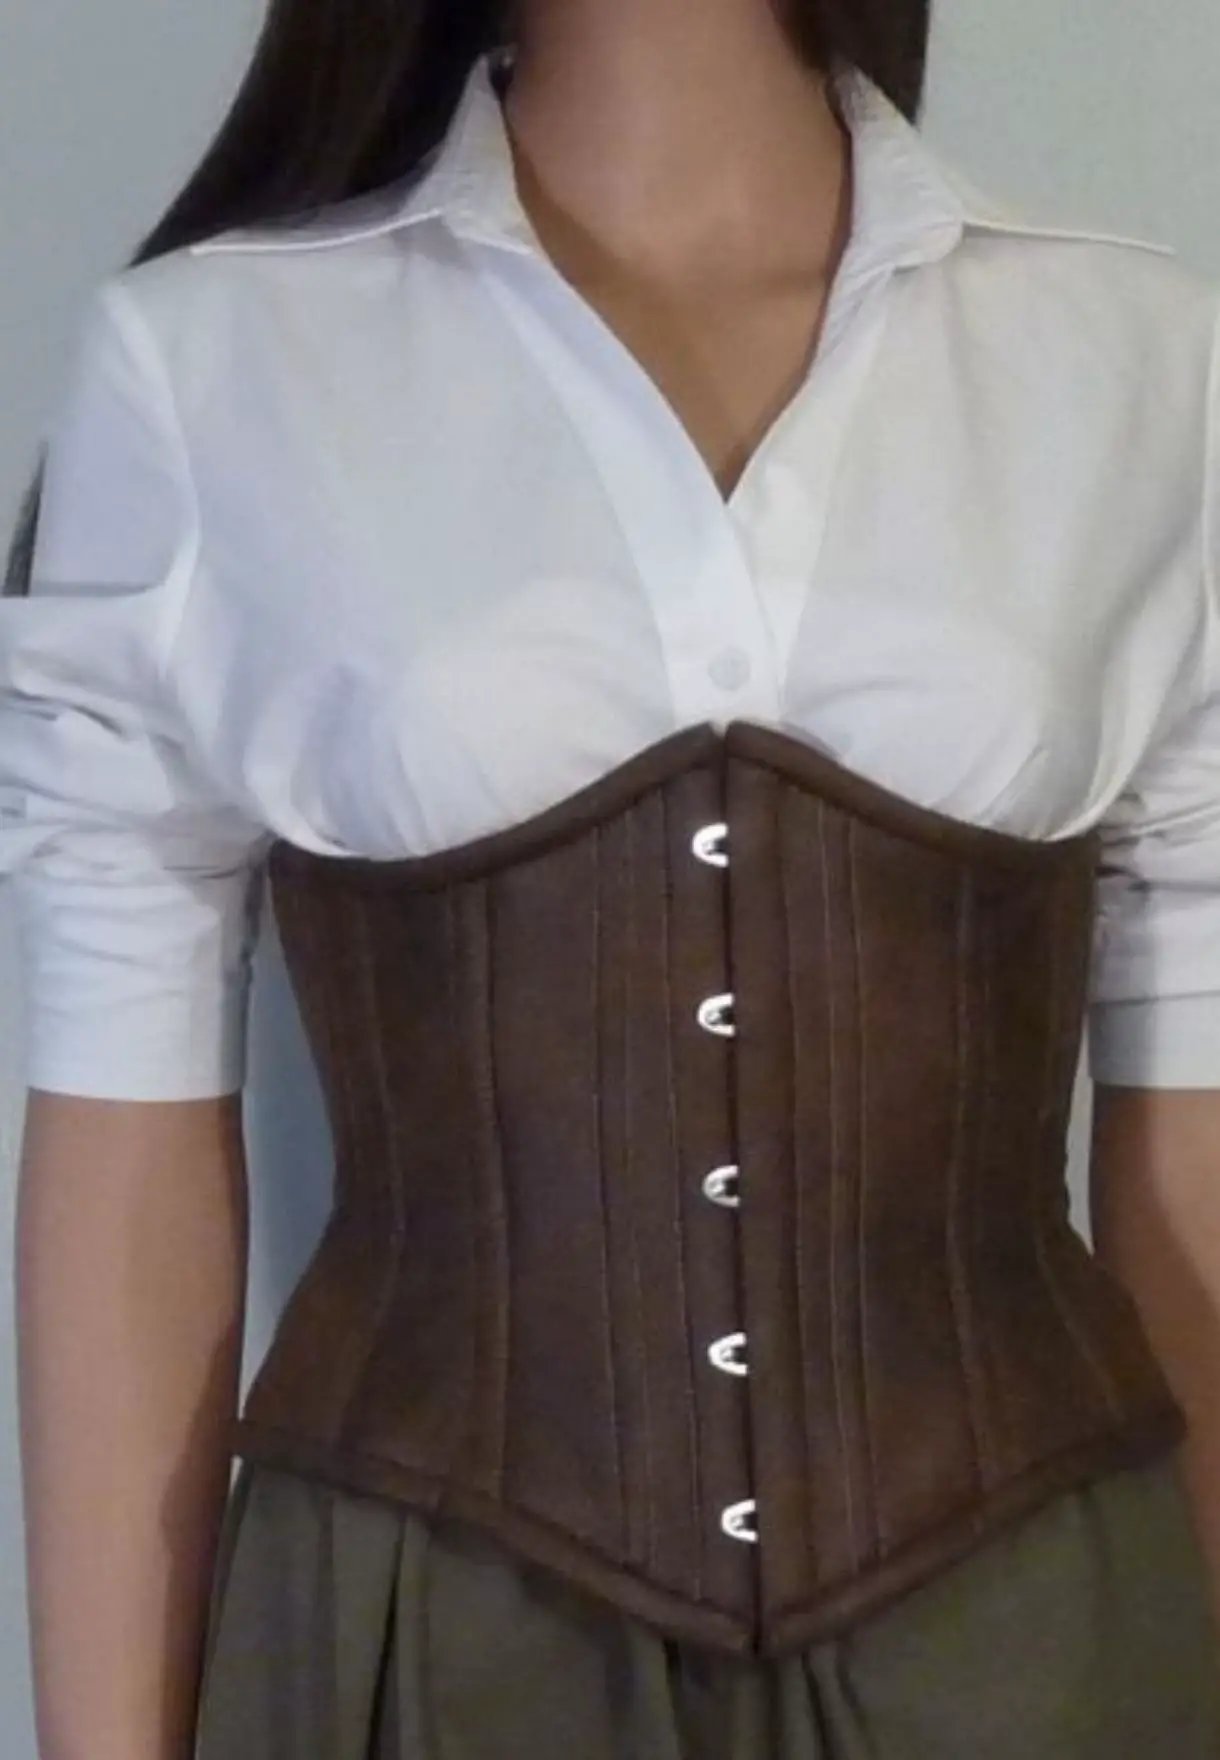 corset over a white shirt equestrienne halloween costume idea